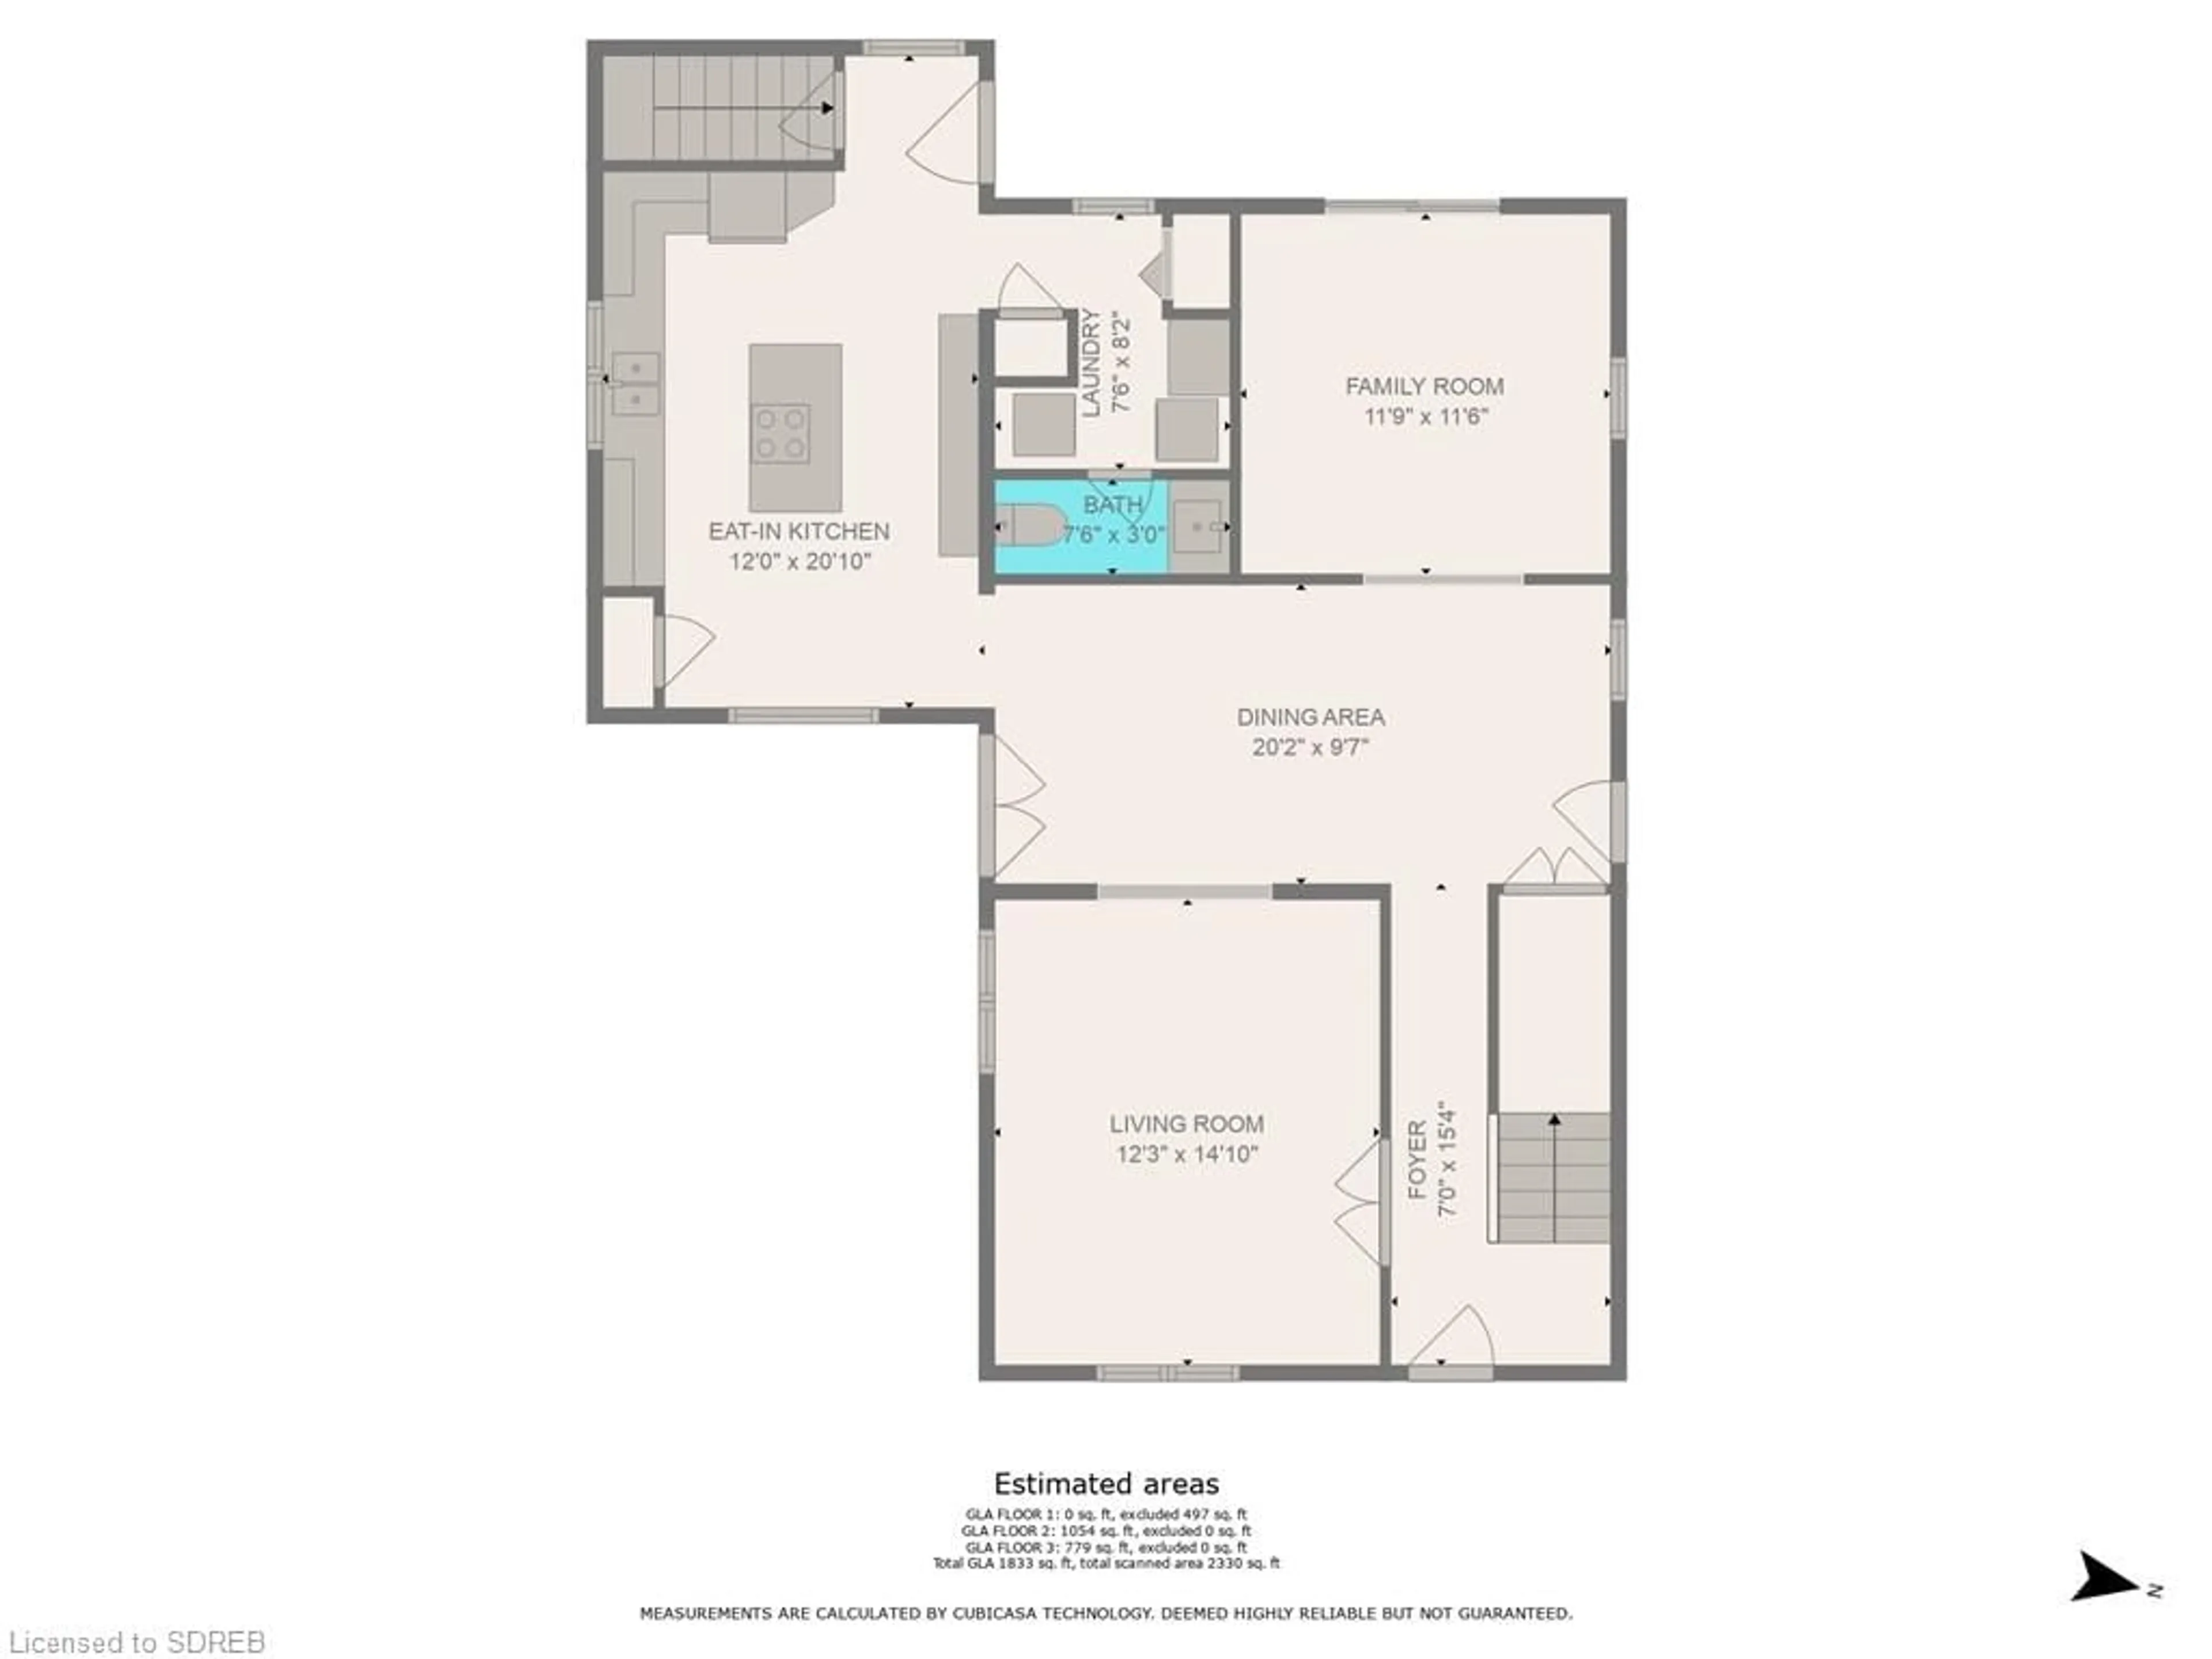 Floor plan for 762 Ireland Rd, Simcoe Ontario N3Y 4K2